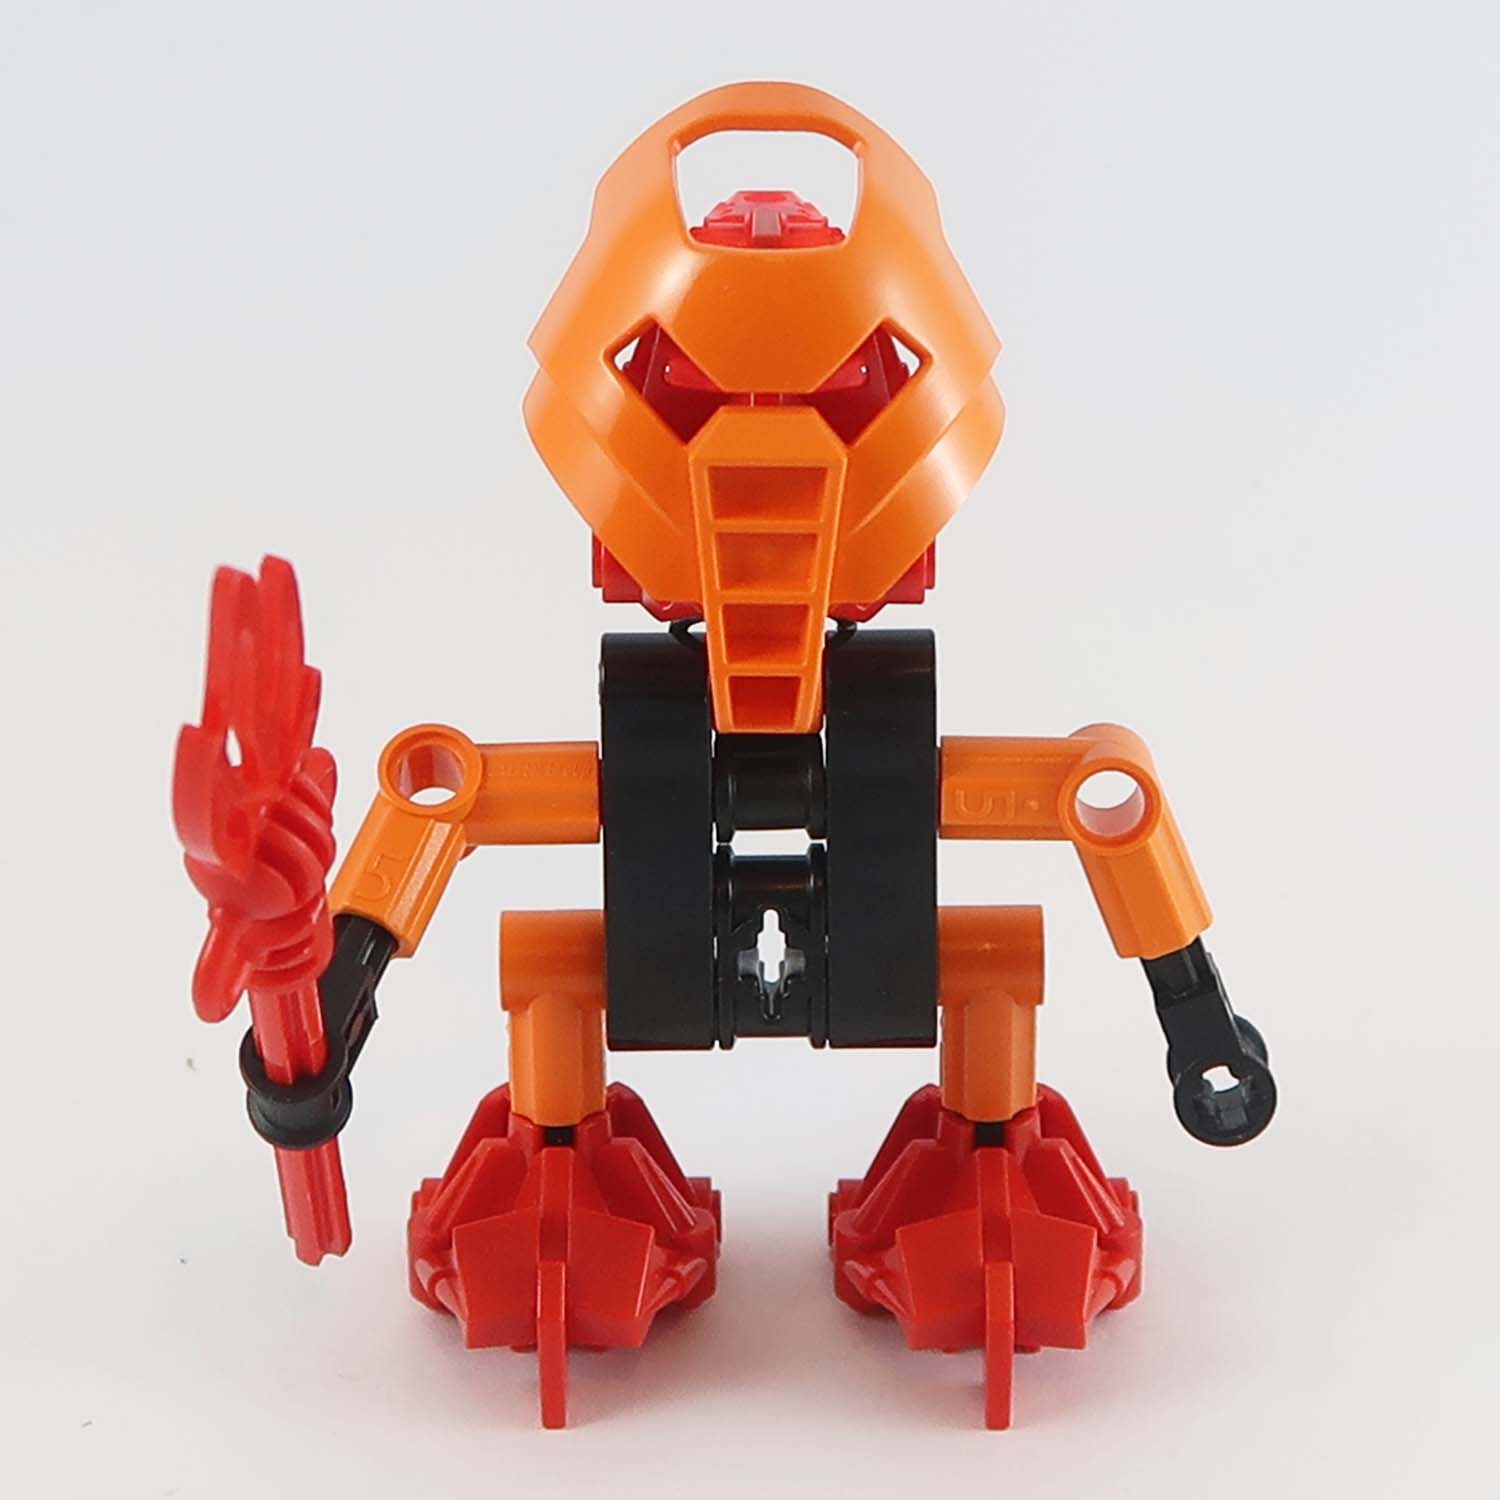 LEGO Bionicle - Turaga Vakama (8540)